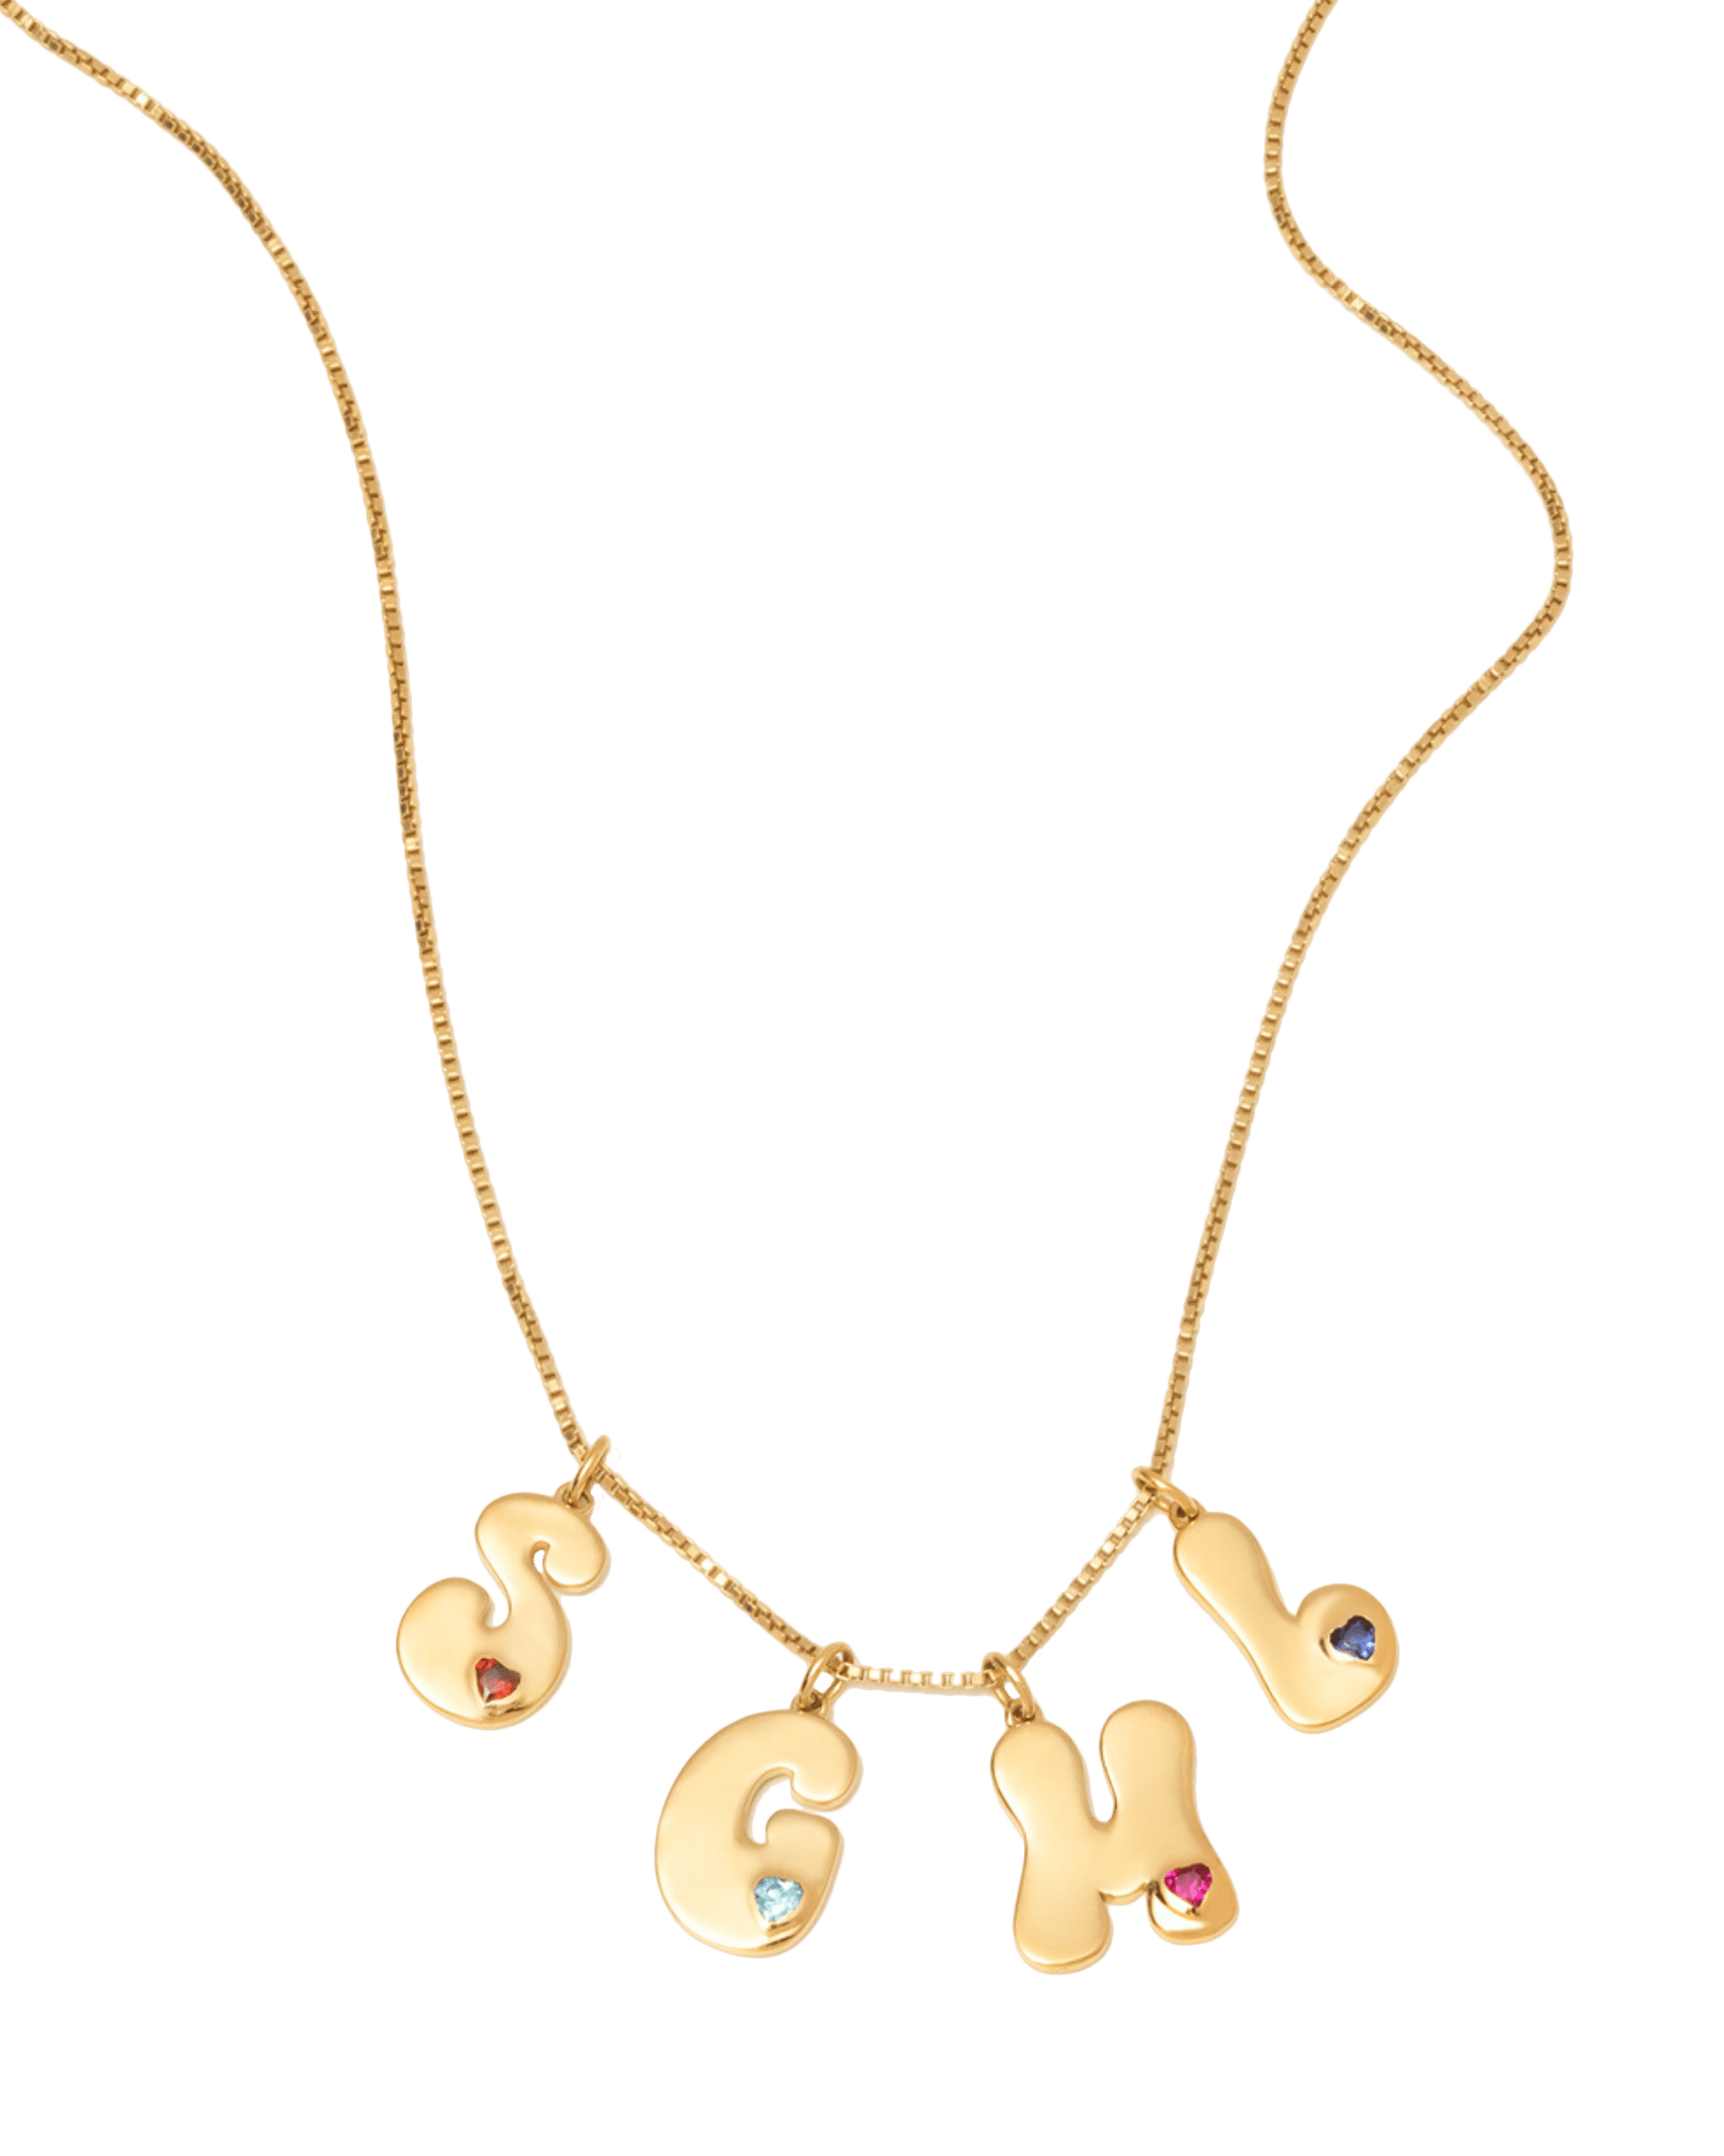 Retro Initial Necklace - 18K Gold Vermeil Necklaces magal-dev 1 Initial 16” 